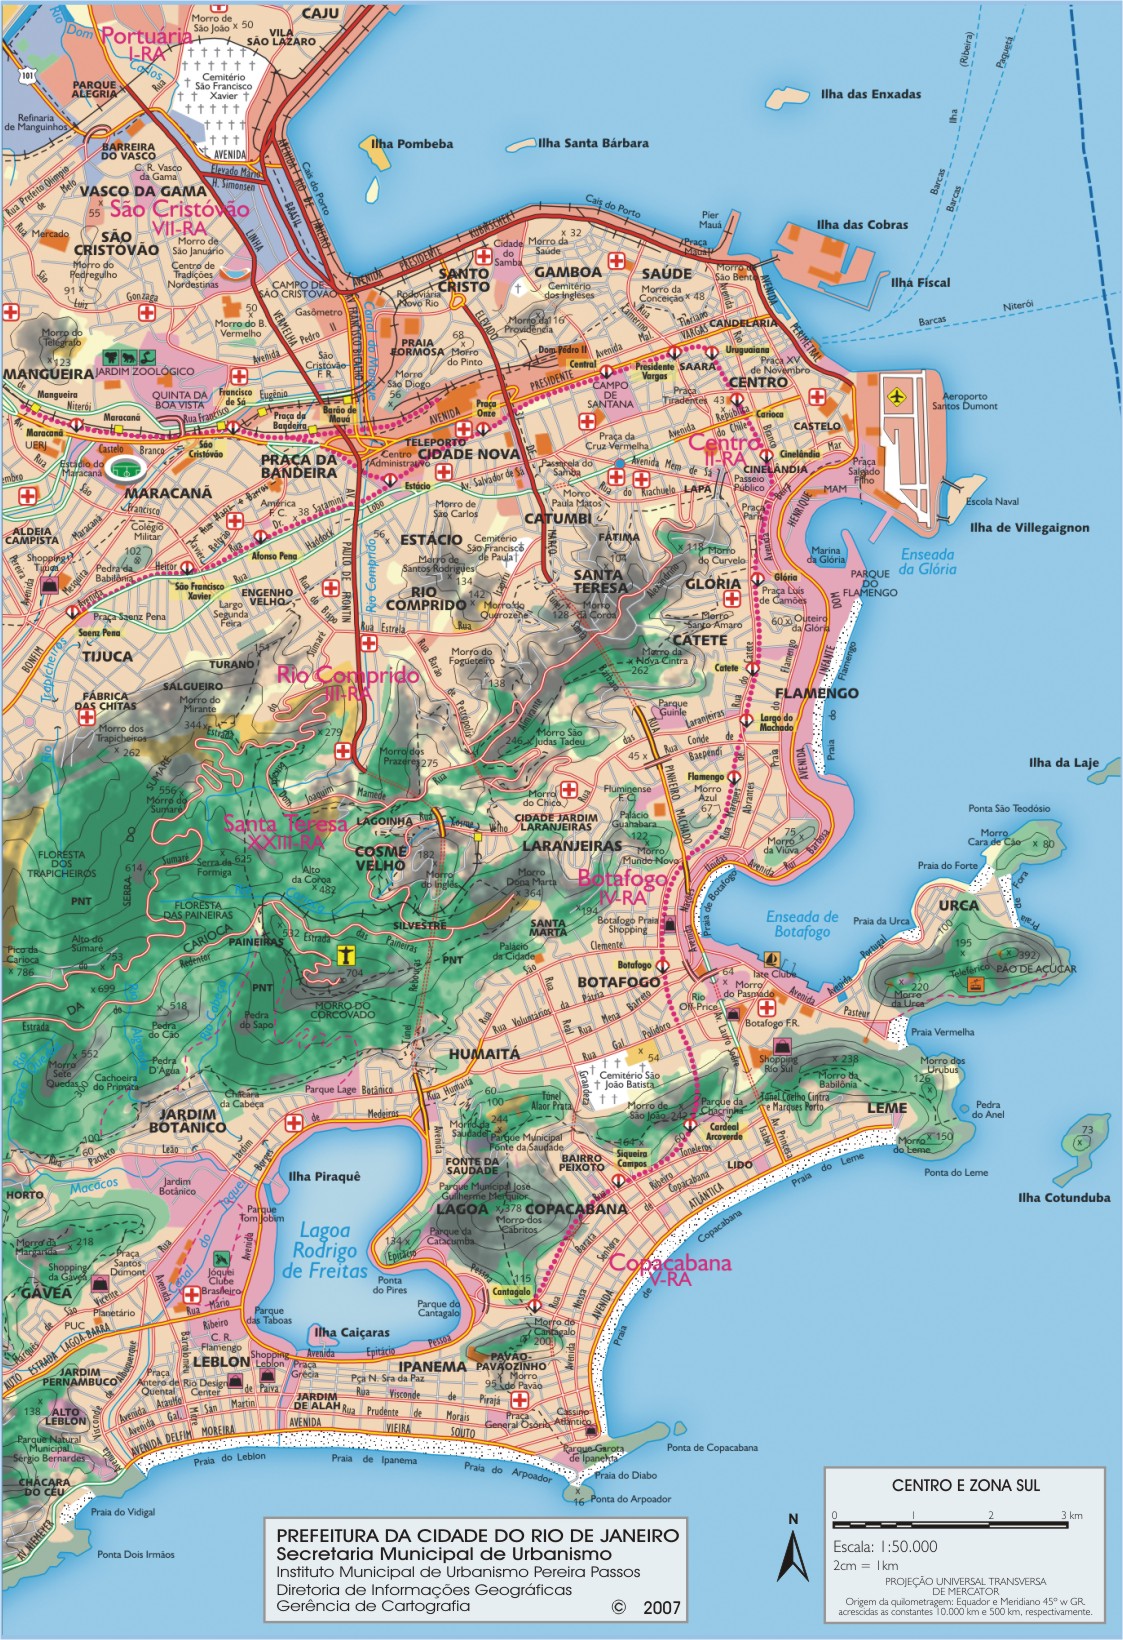 Tourist map of downtown Rio de Janeiro - Full size | Gifex